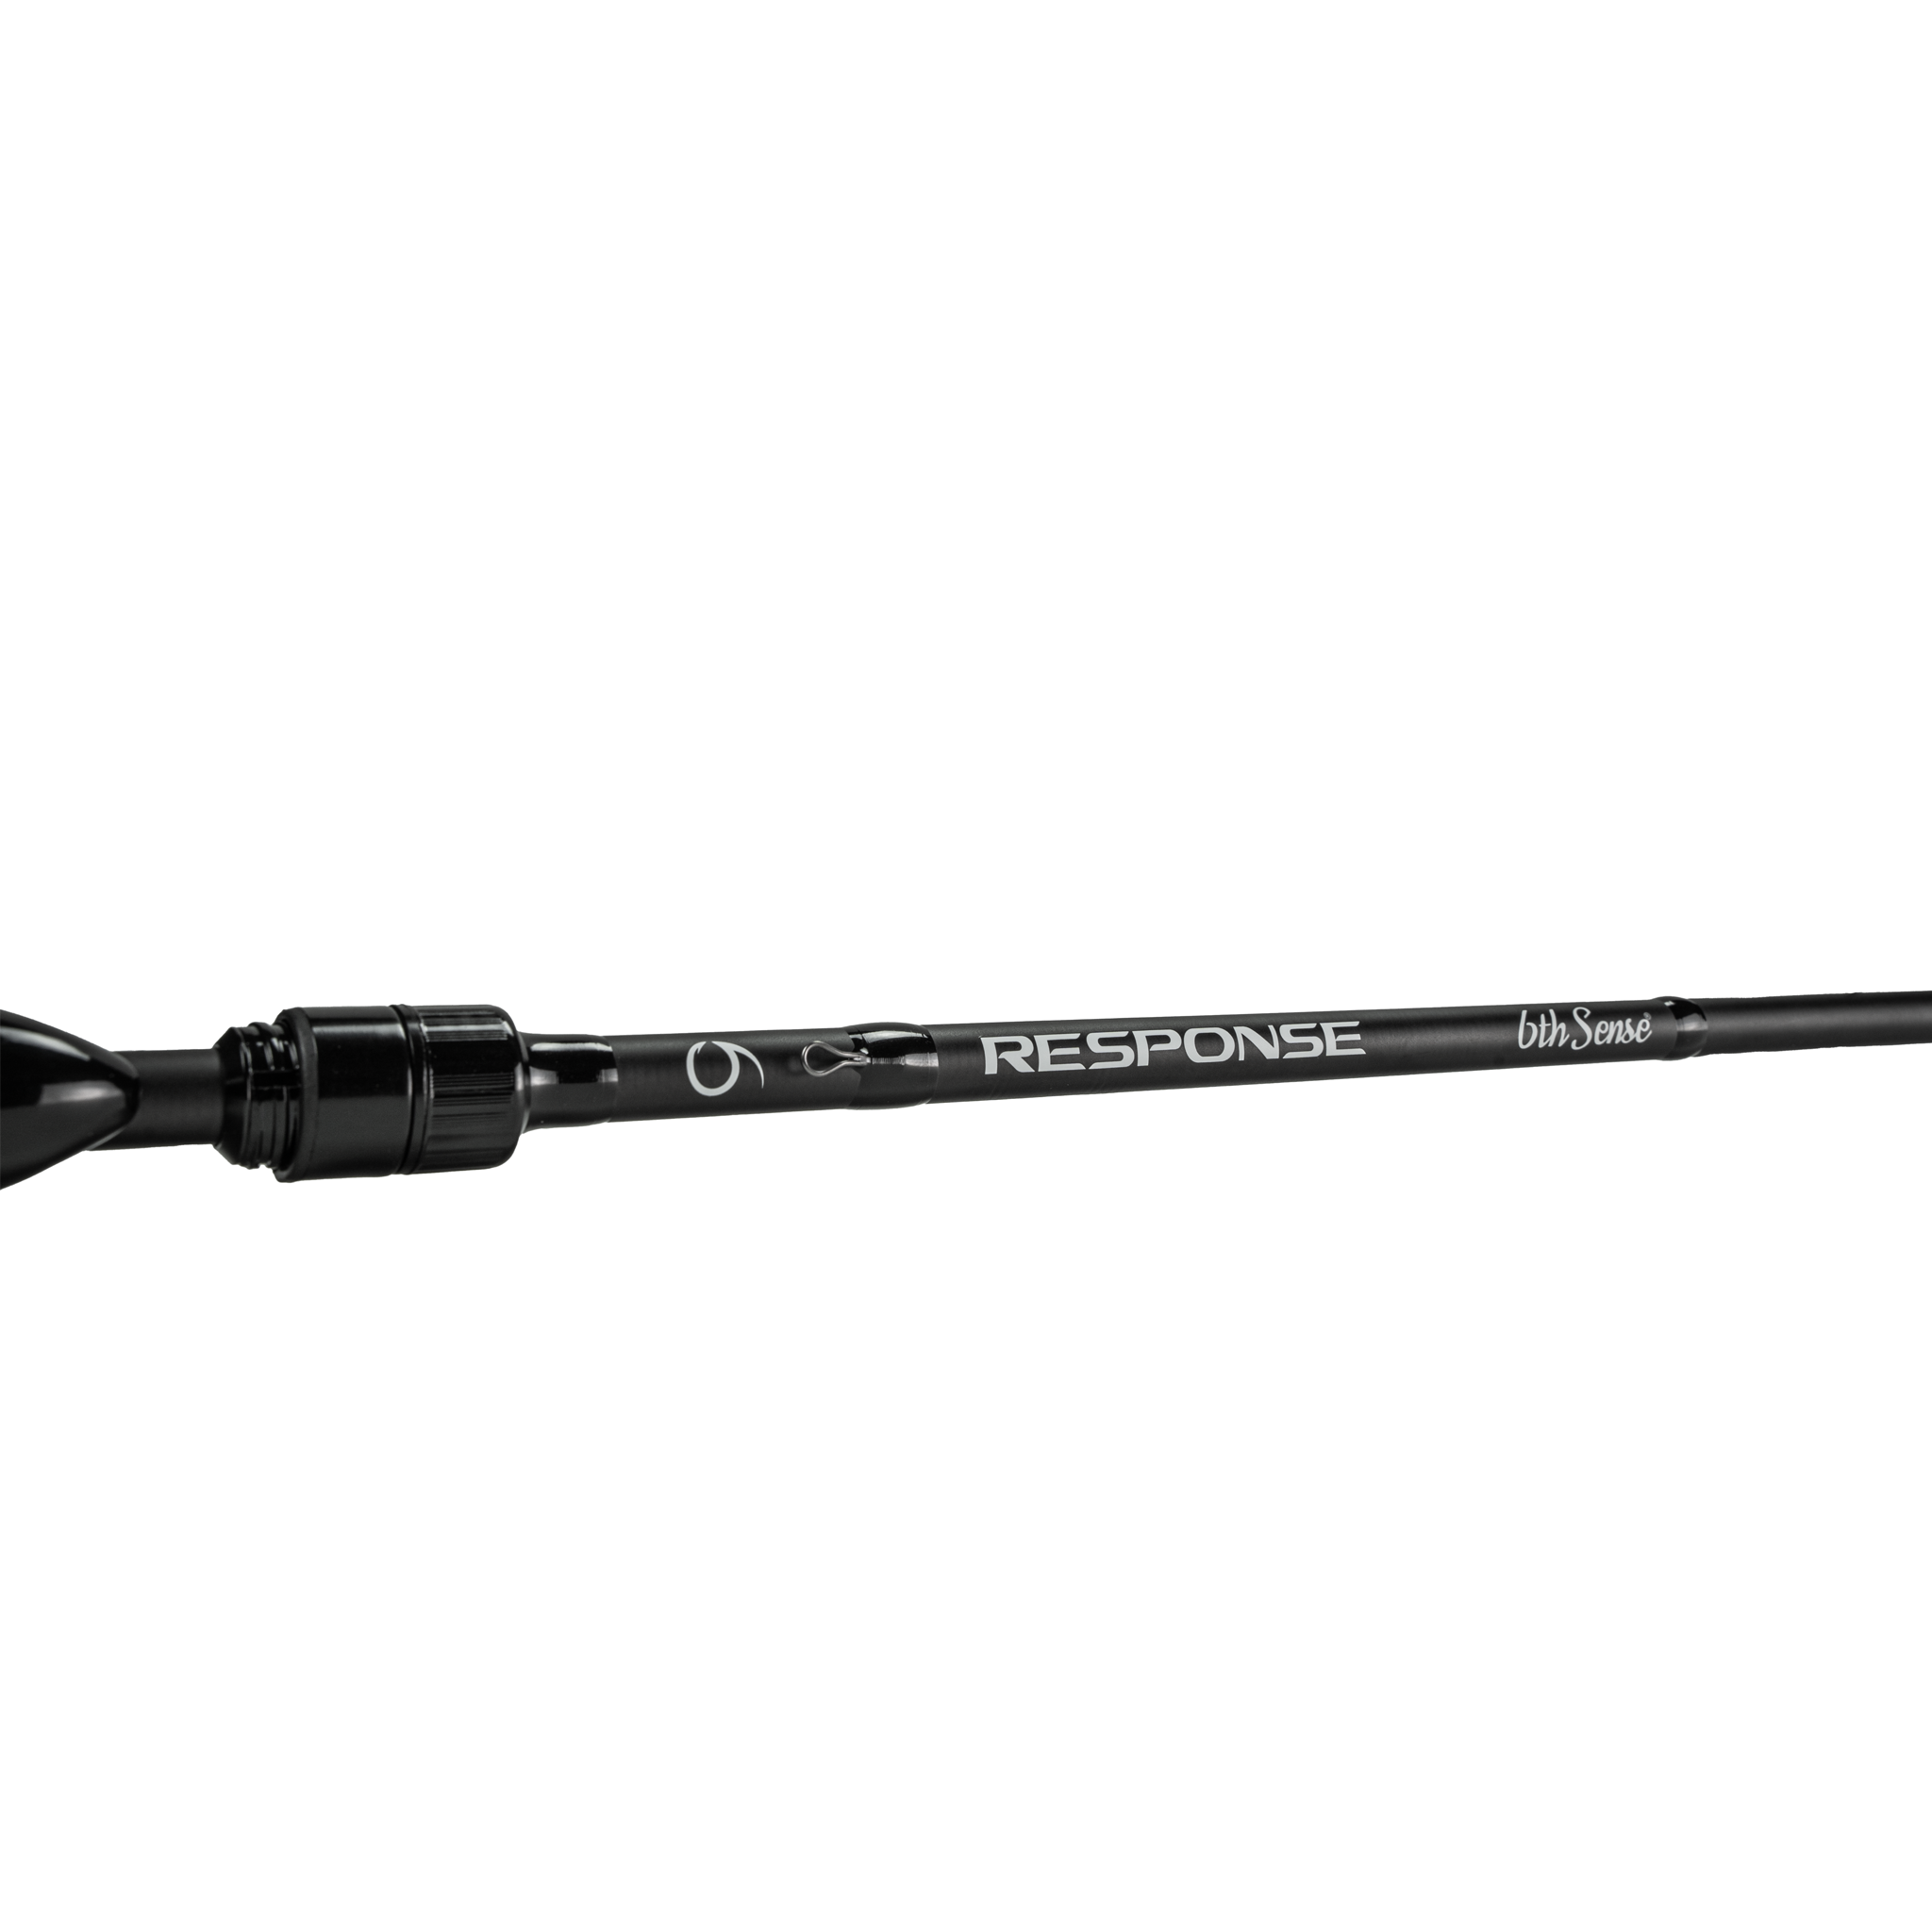 6th Sense Fishing - Casting Rods - Unicorn 7'2 Medium, Fast